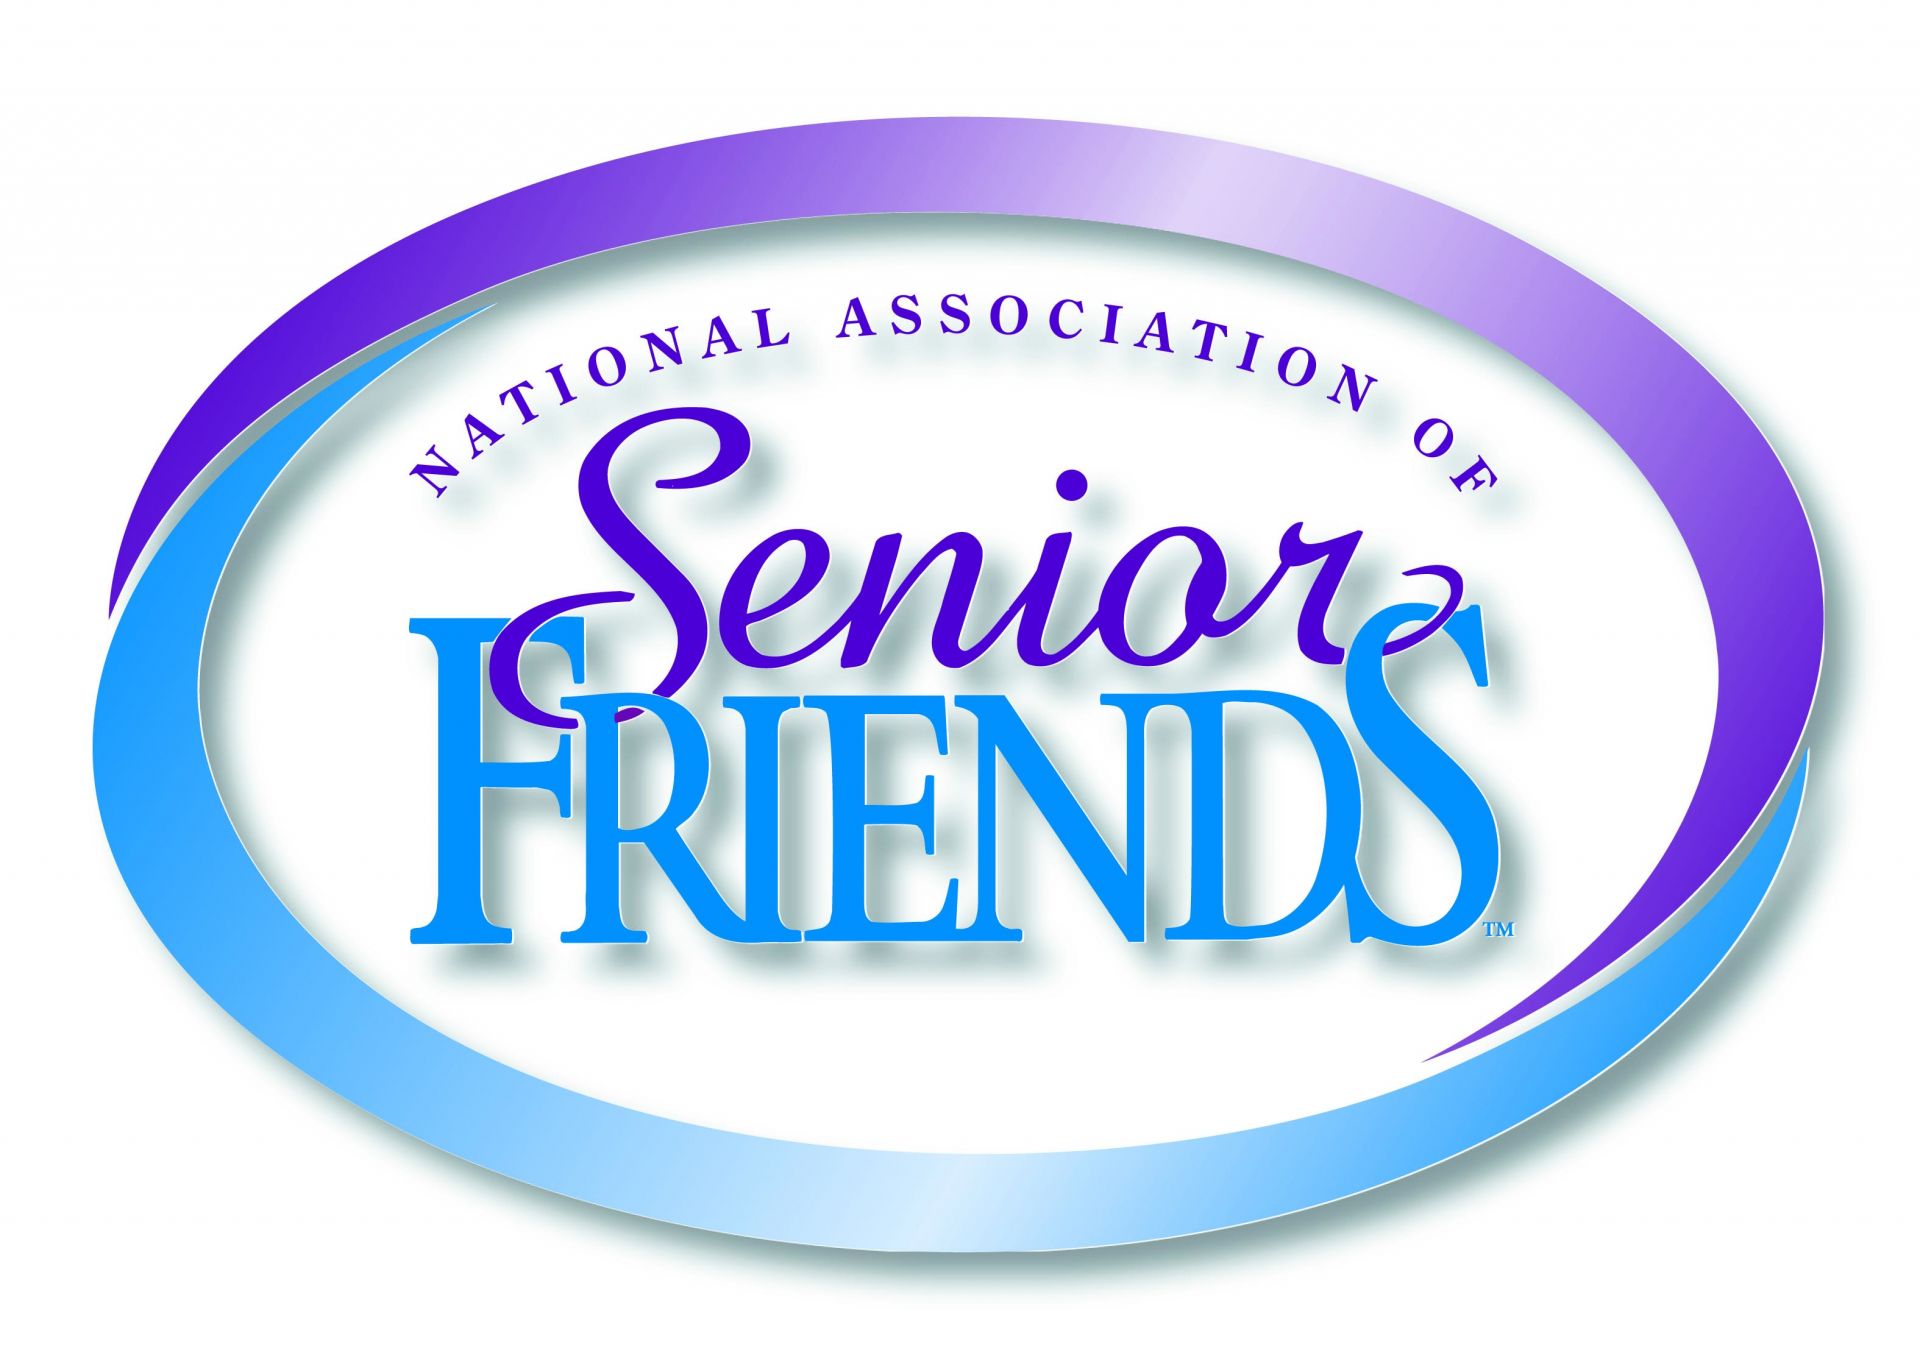 National Associate of Senior Friends logo